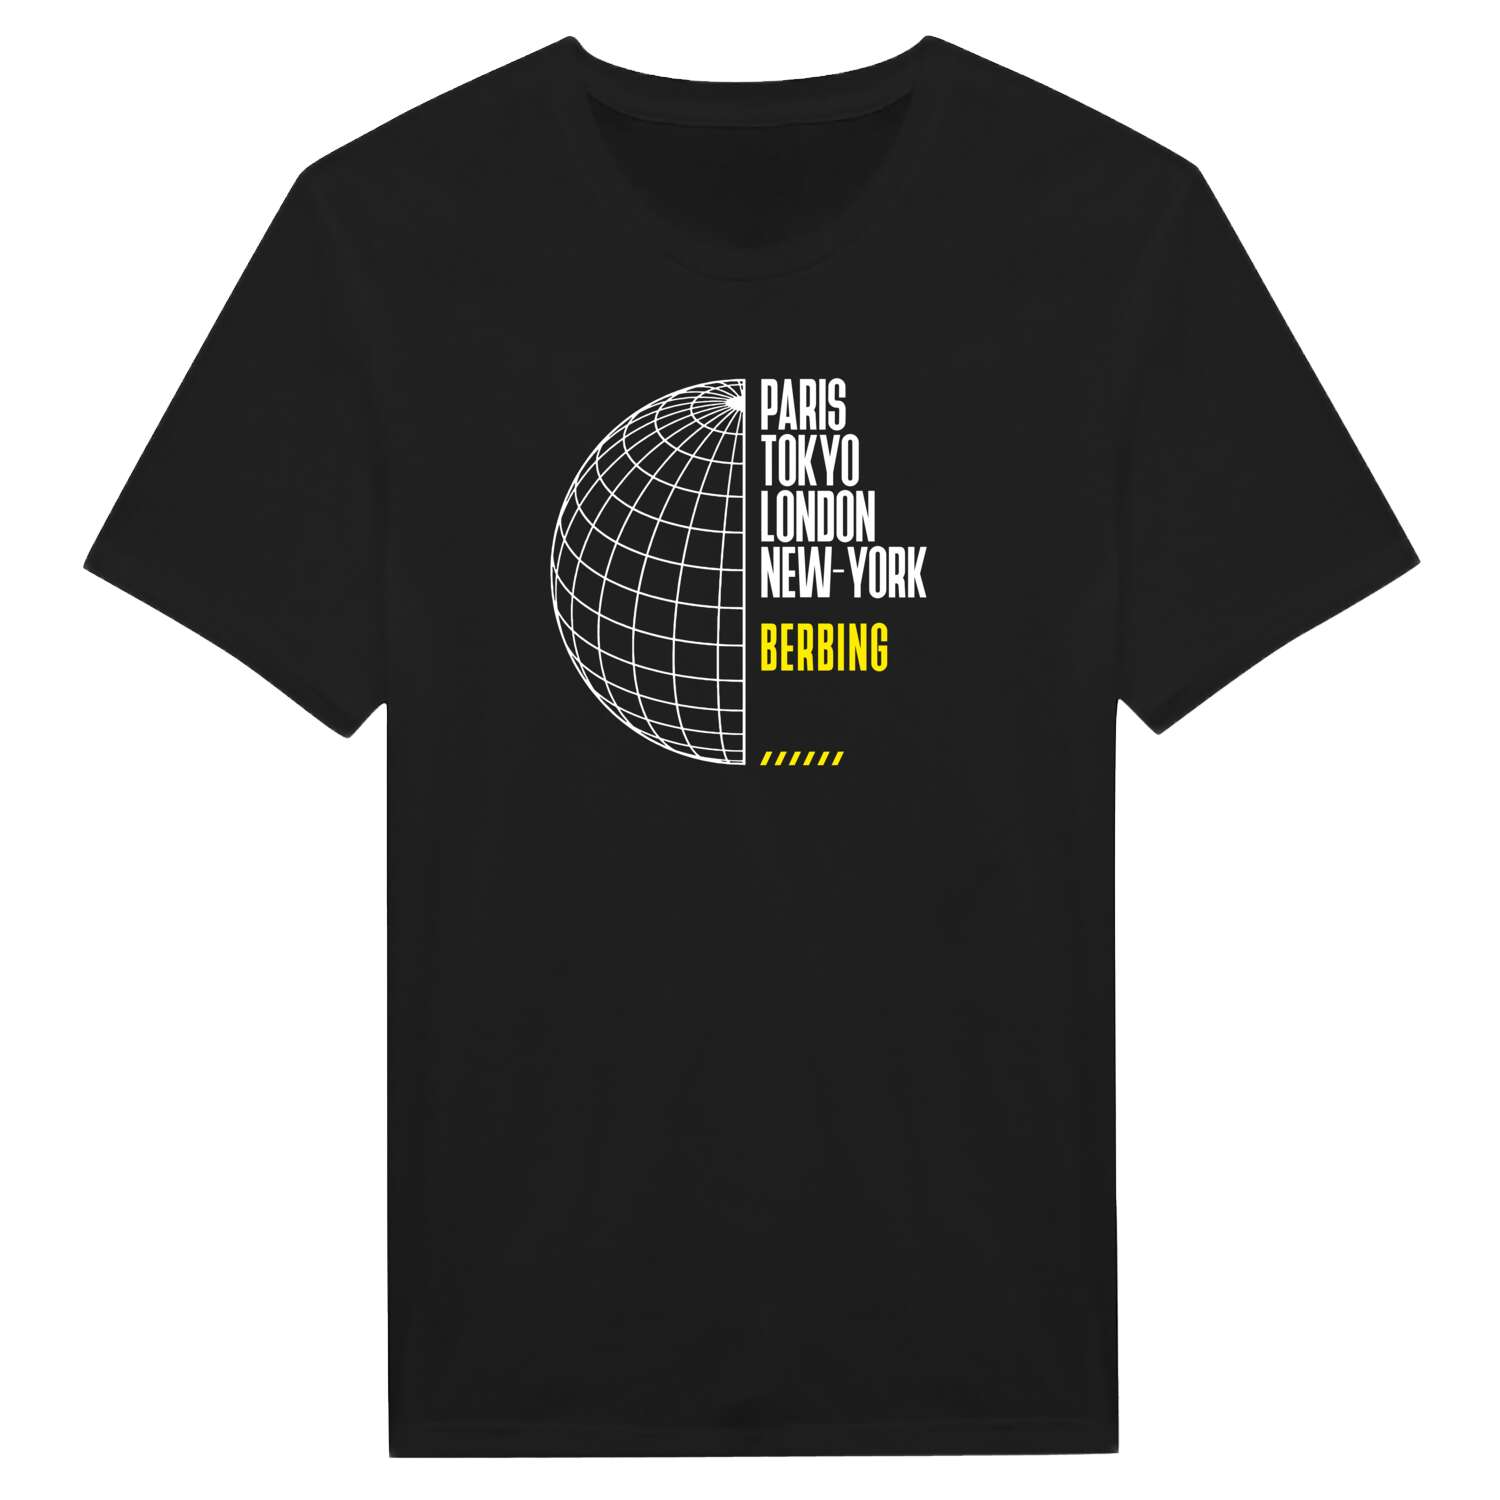 Berbing T-Shirt »Paris Tokyo London«